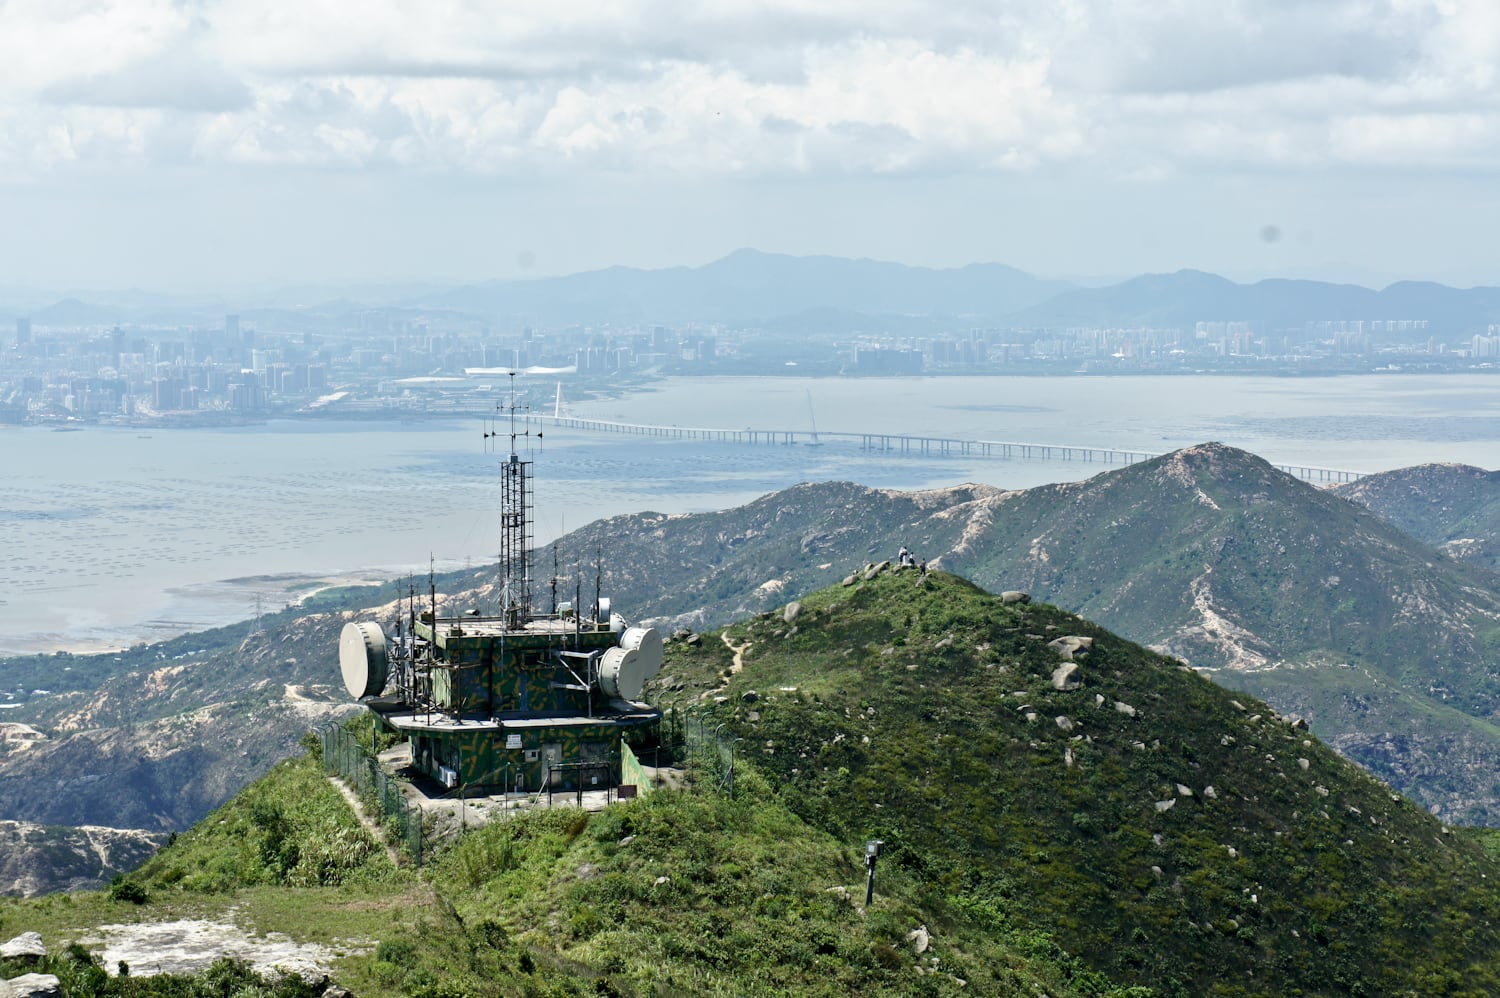 Castle Peak - Military Radar Station (青山雷達電波接收轉發站)